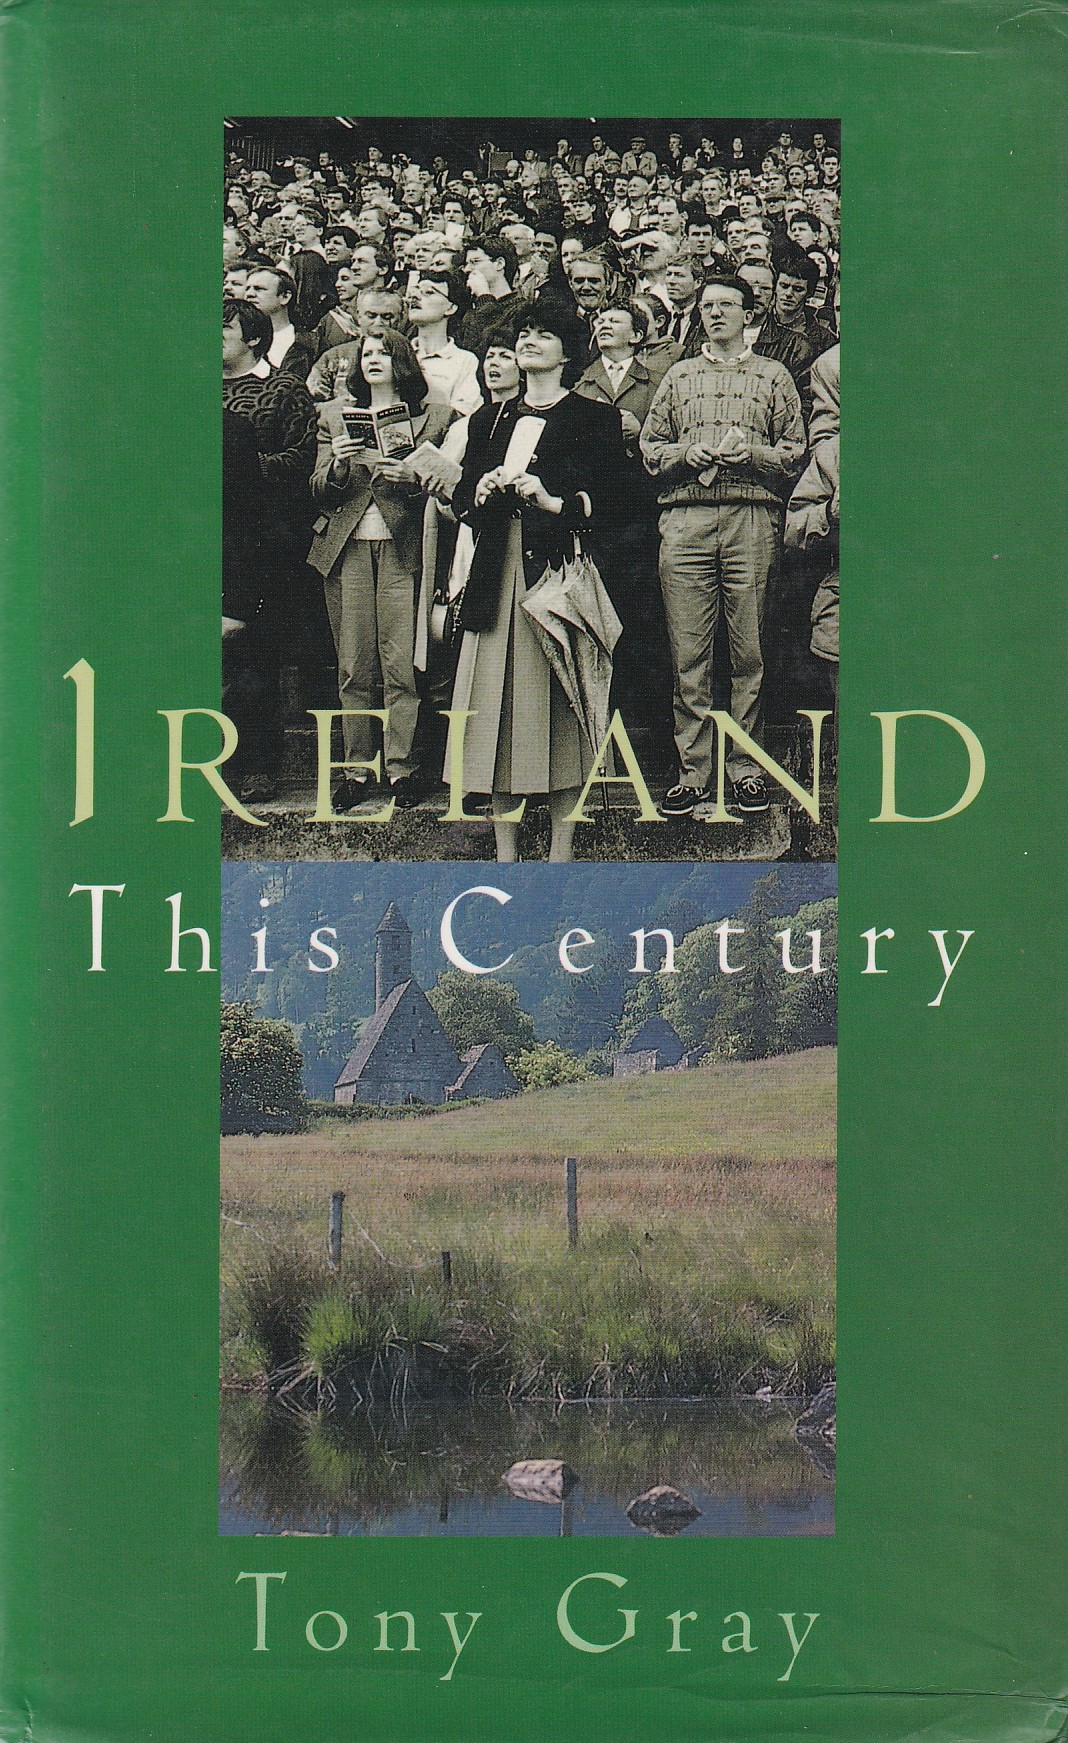 Ireland This Century | Tony Gray | Charlie Byrne's